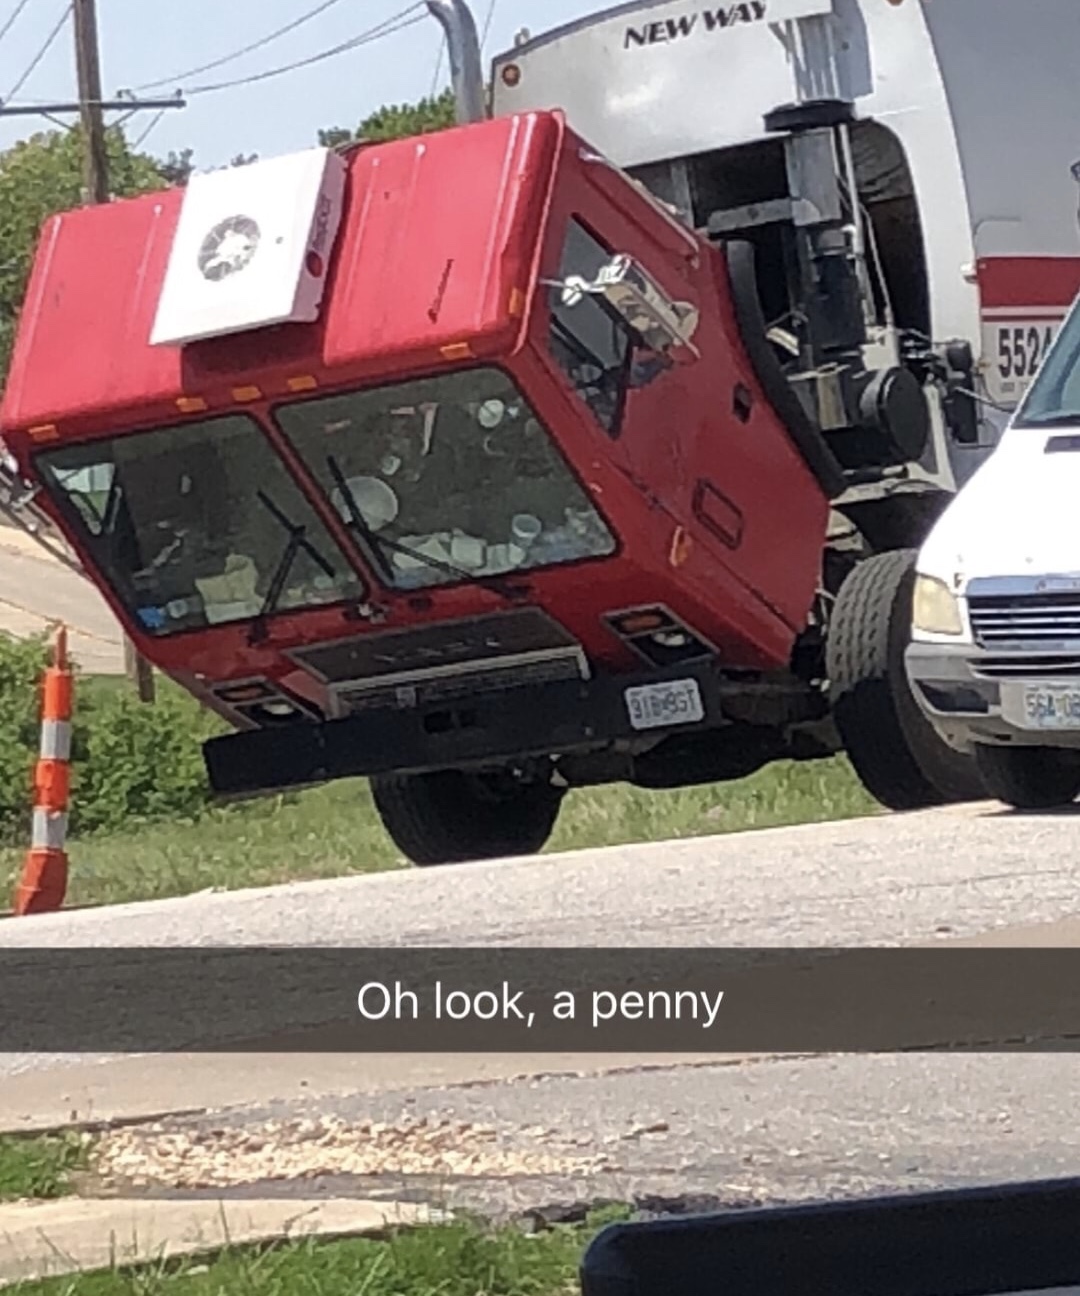 memes - oh penny mem - New Way 55100 Oh look, a penny